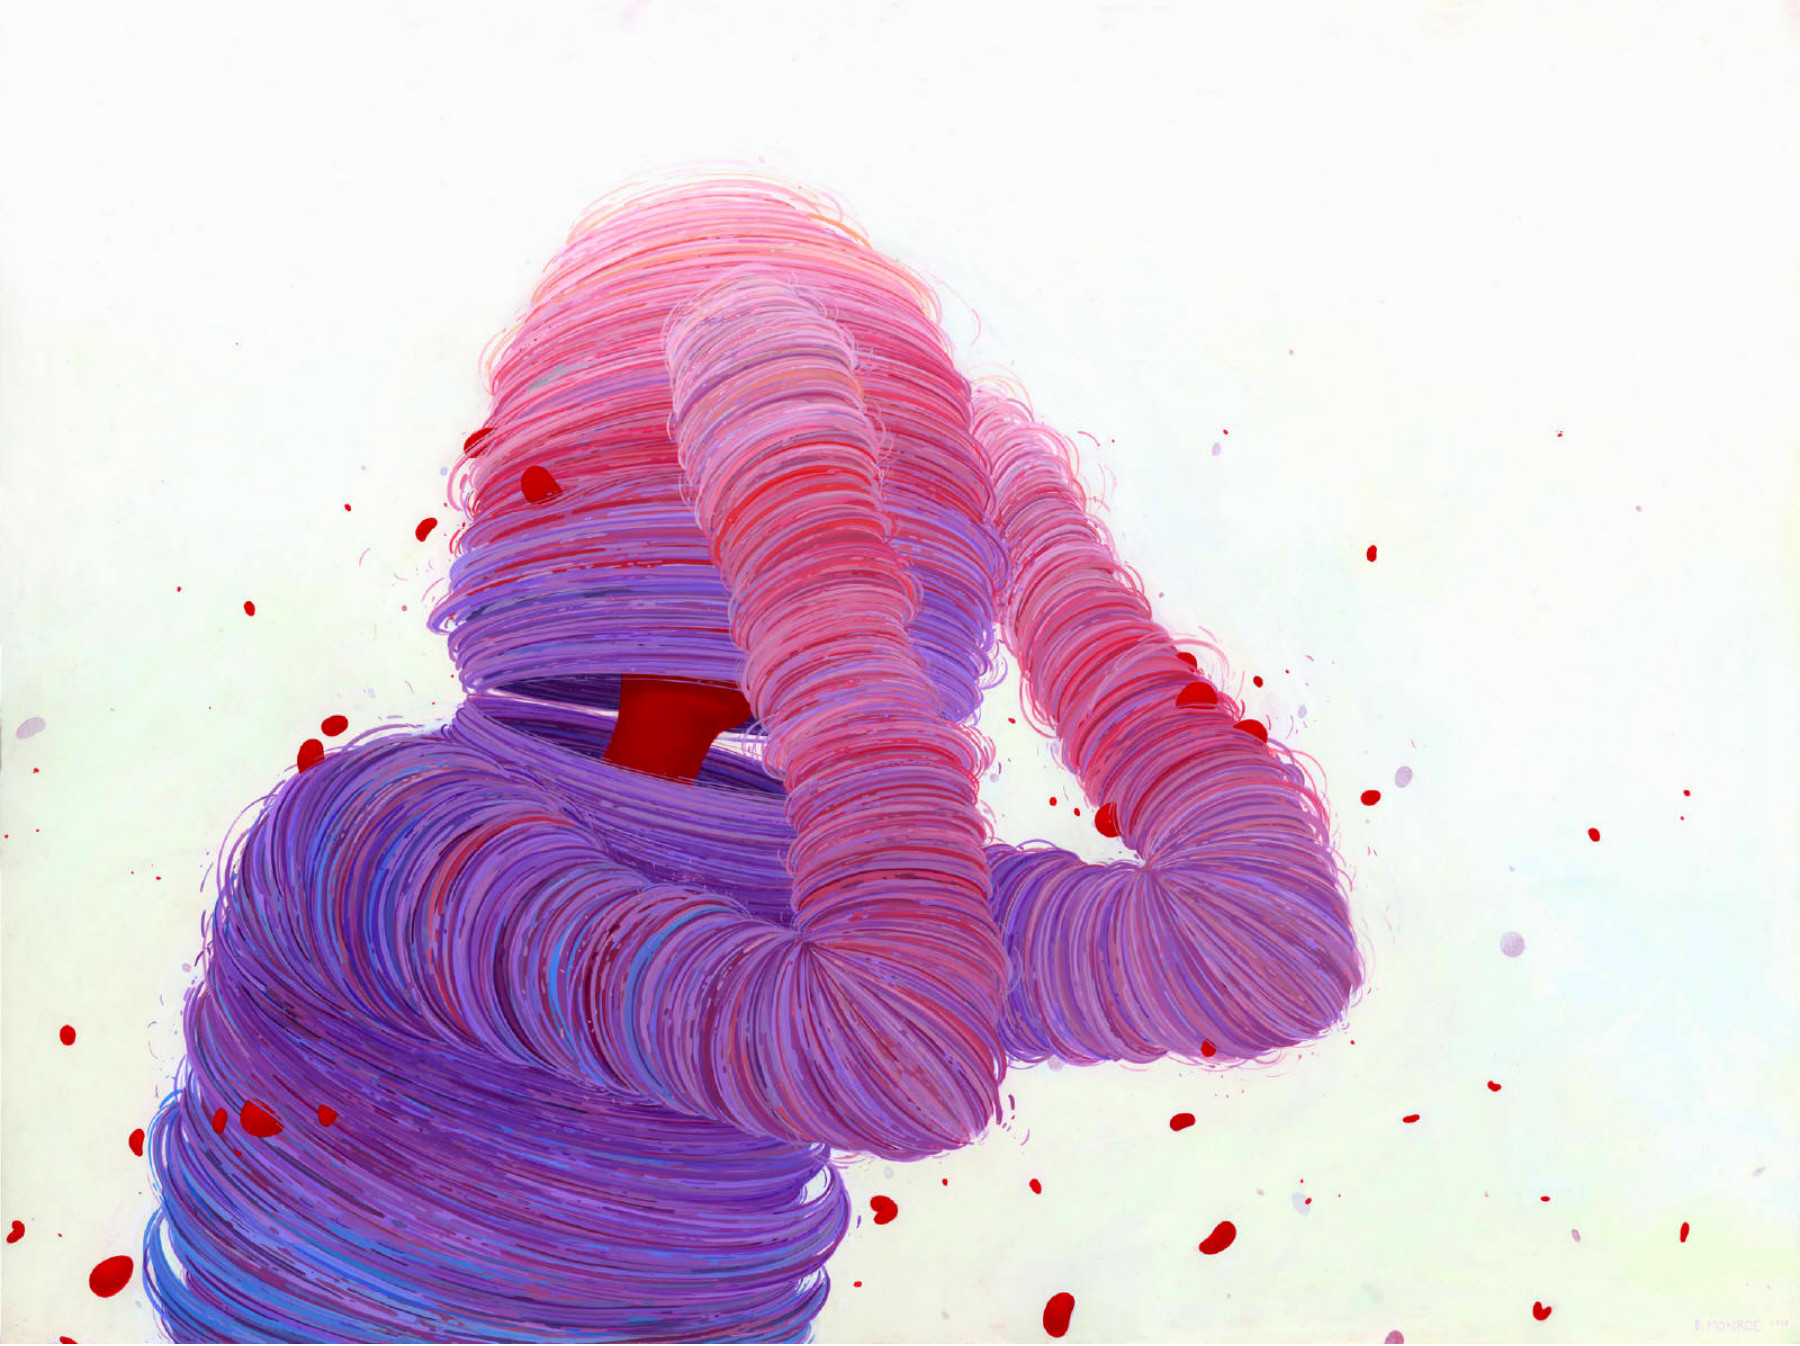 brendan monroe illustration blob colour surreal pink 